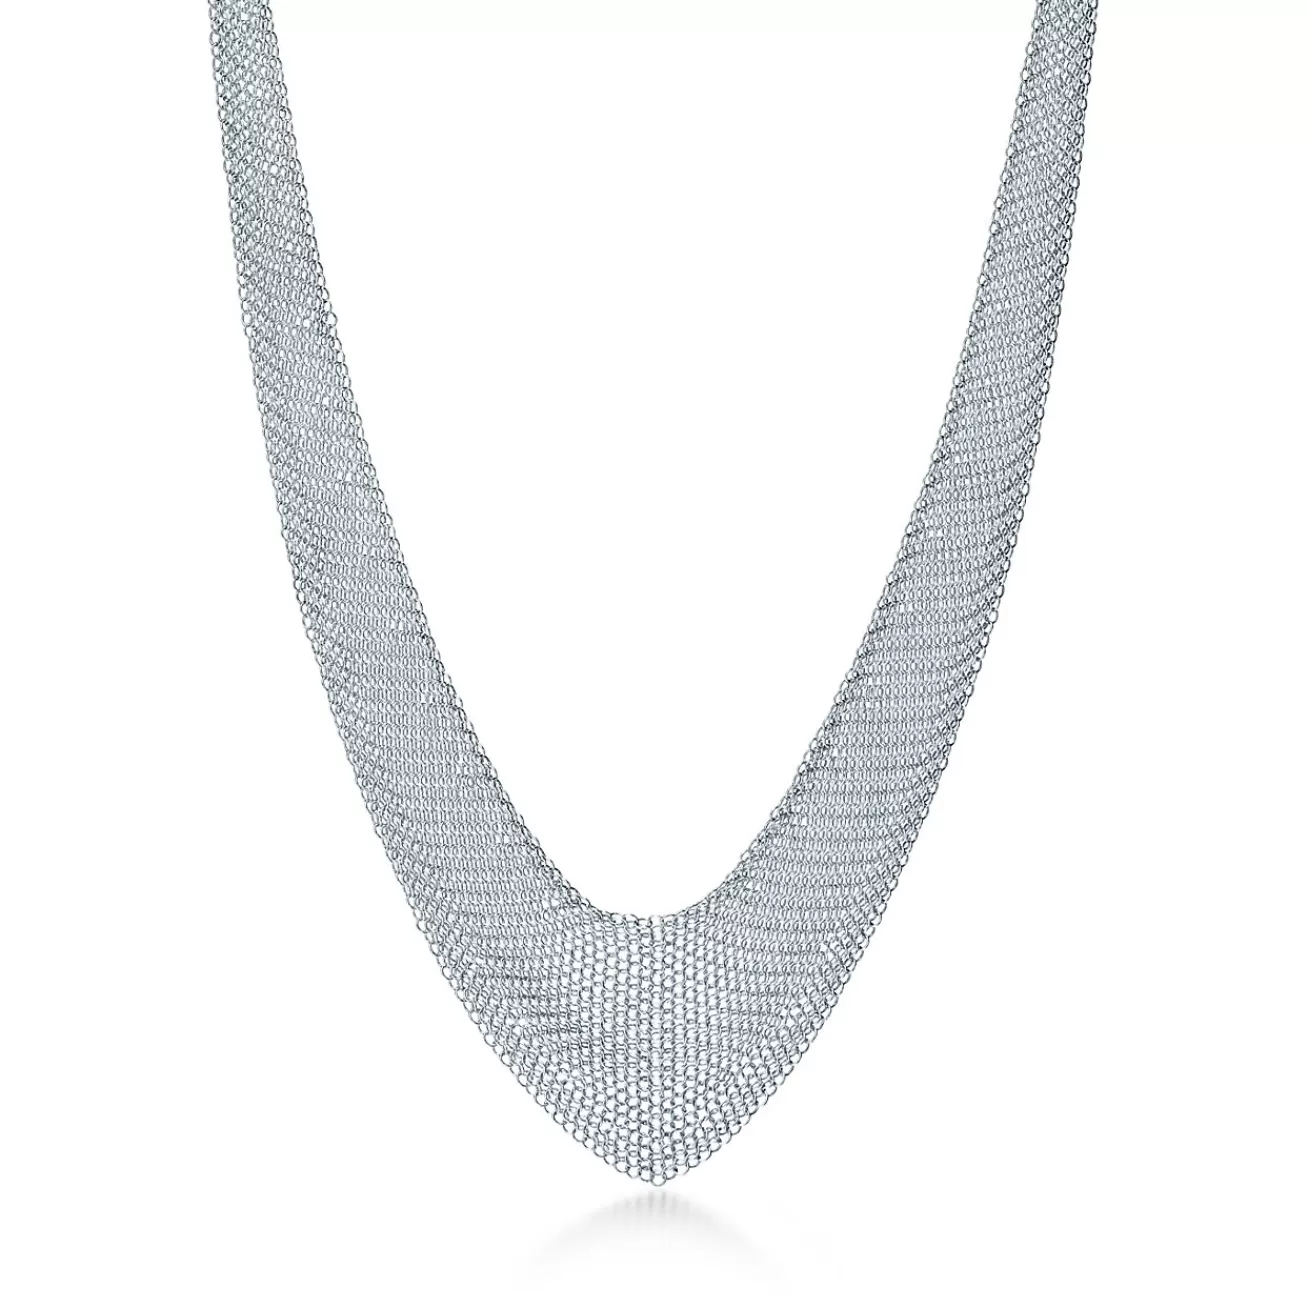 Tiffany & Co. Elsa Peretti® Mesh bib necklace in sterling silver, small. | ^ Necklaces & Pendants | Sterling Silver Jewelry